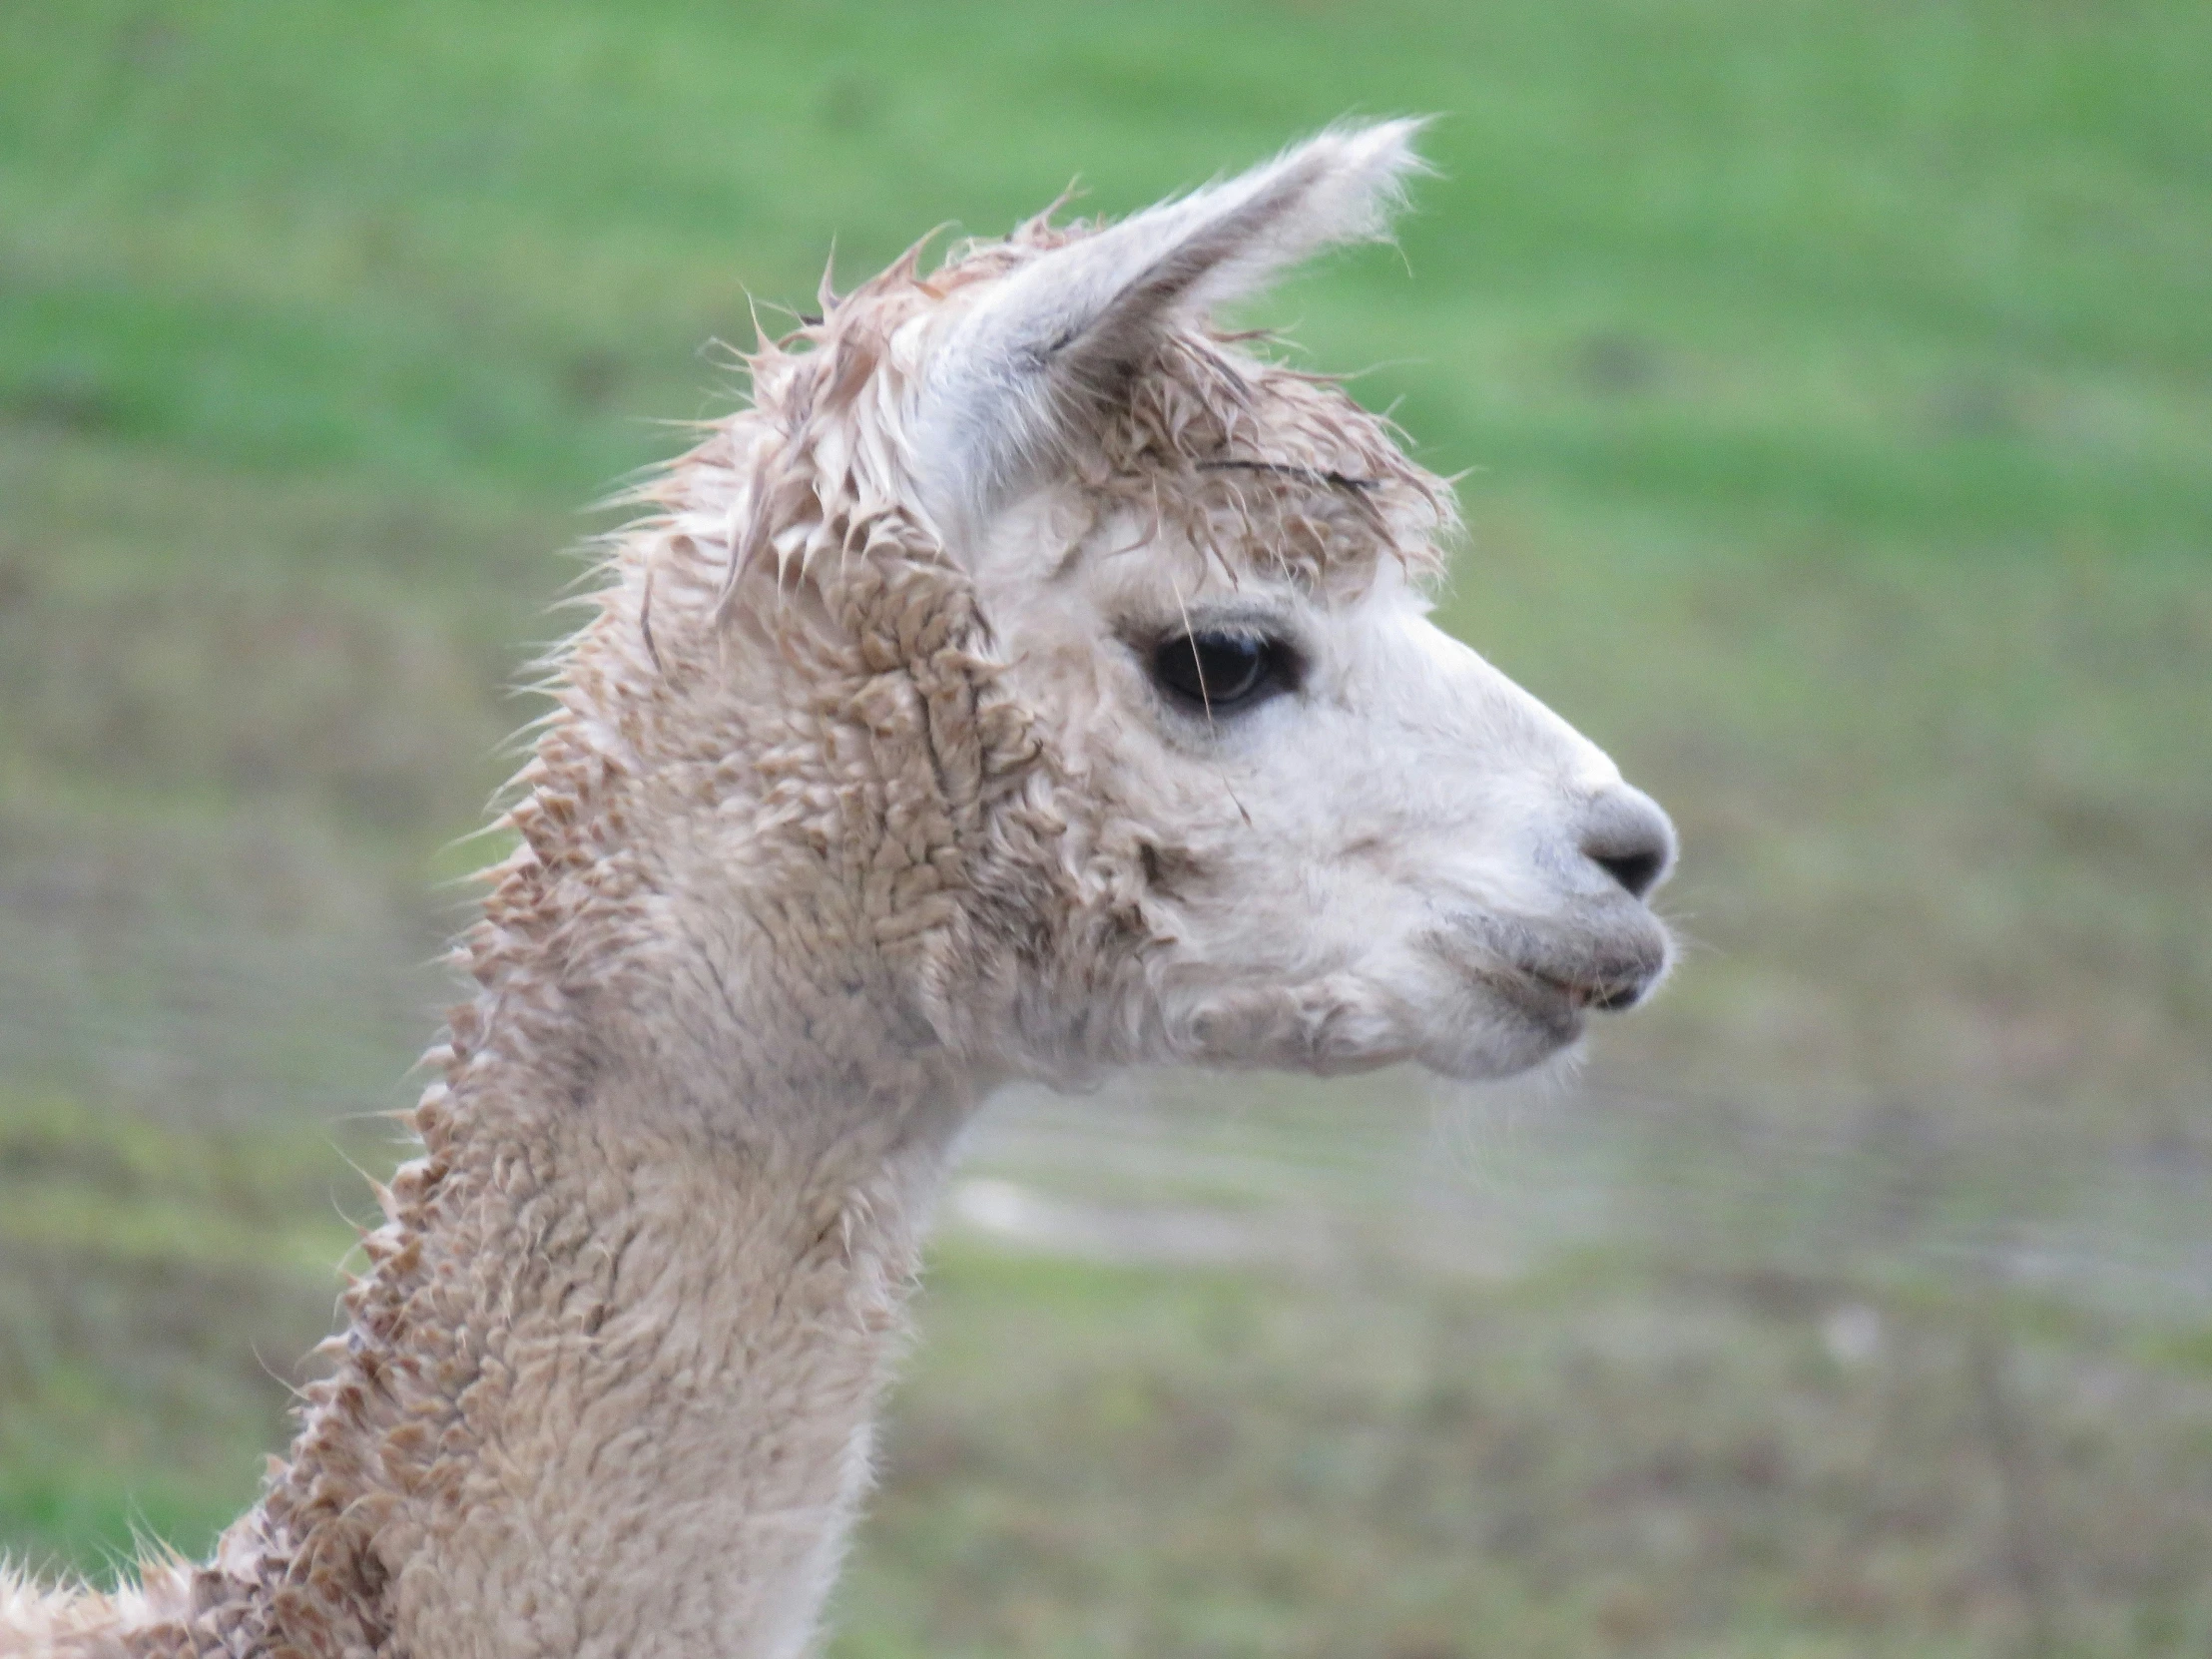 a close up of an alpaca on the grass